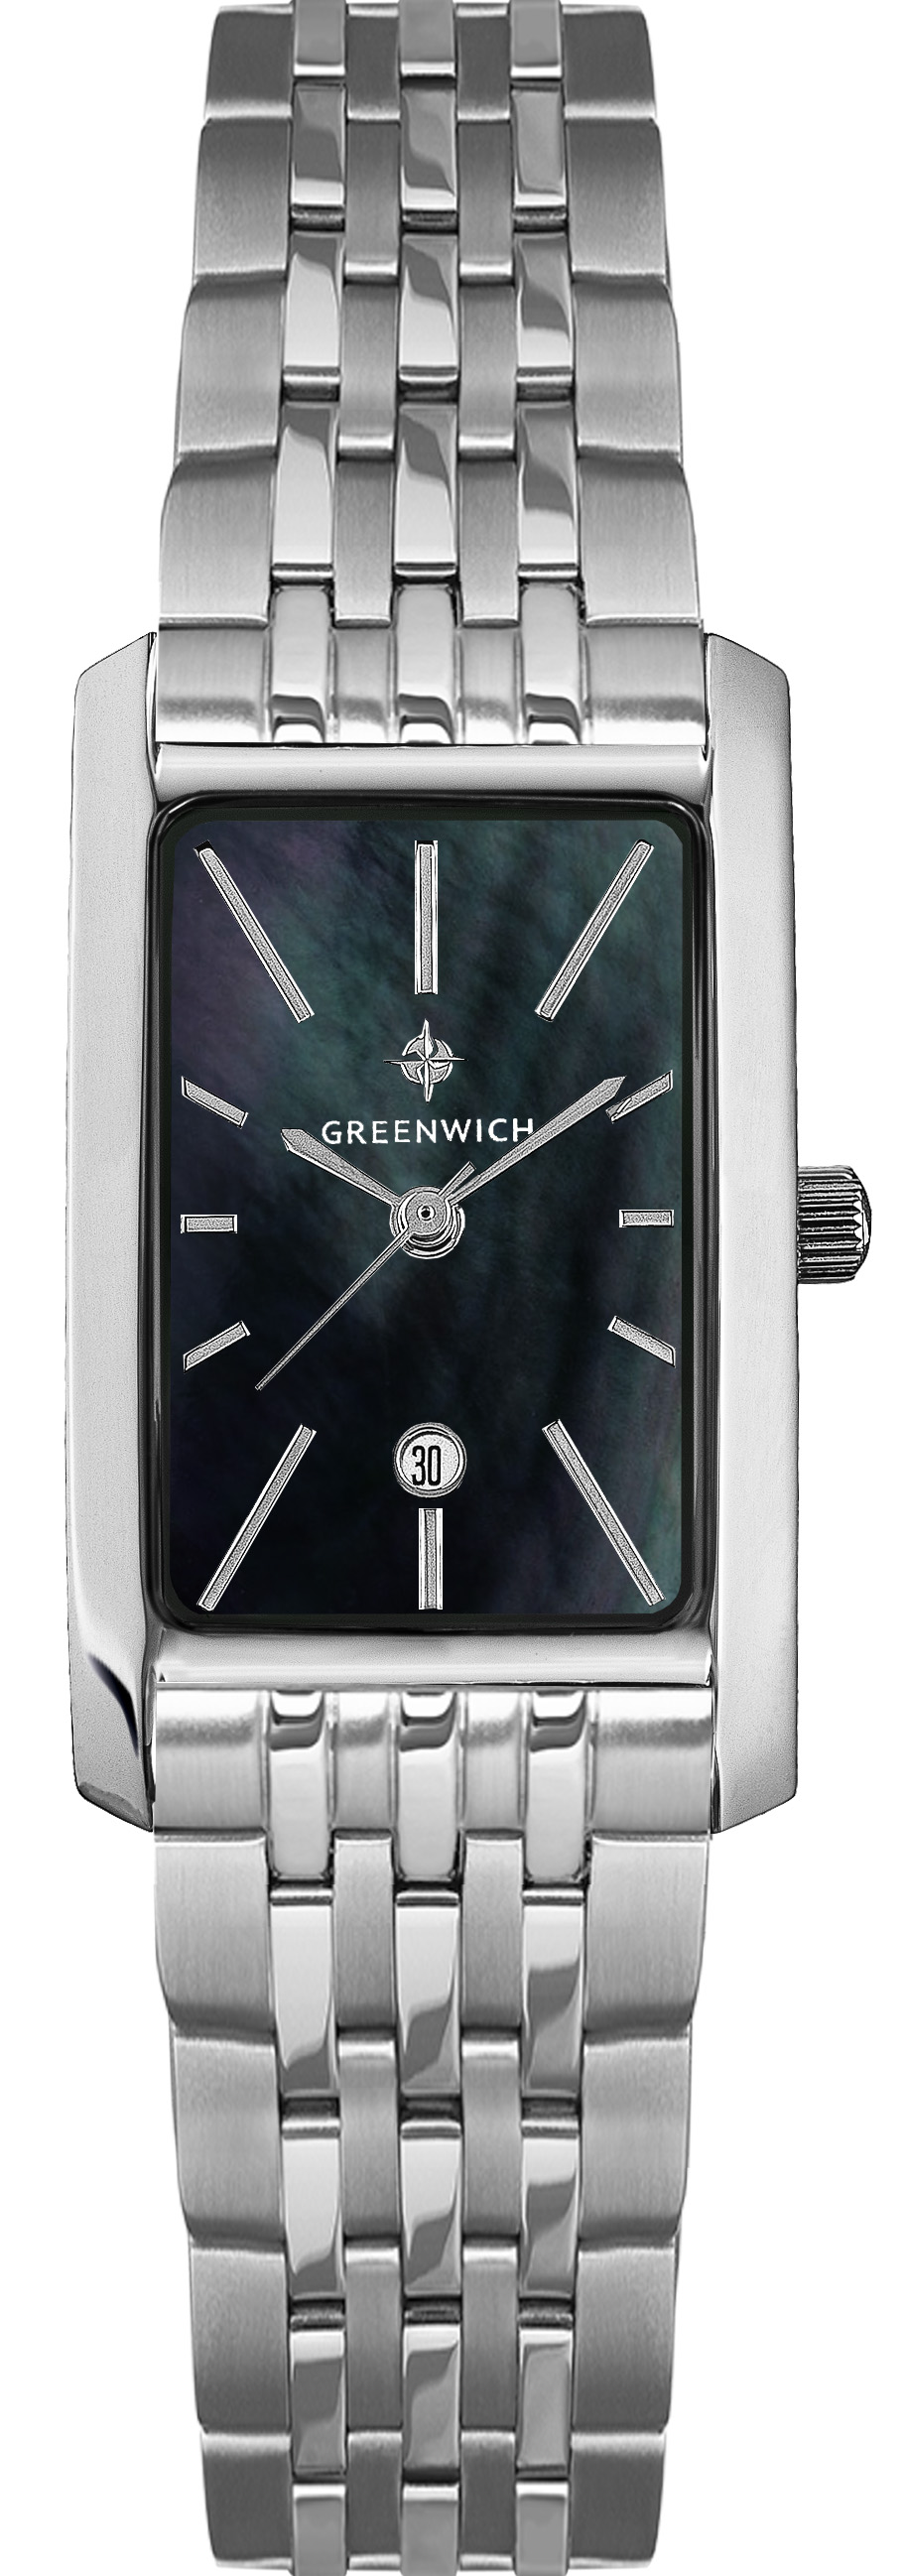 GW 511.10.11, наручные часы Greenwich